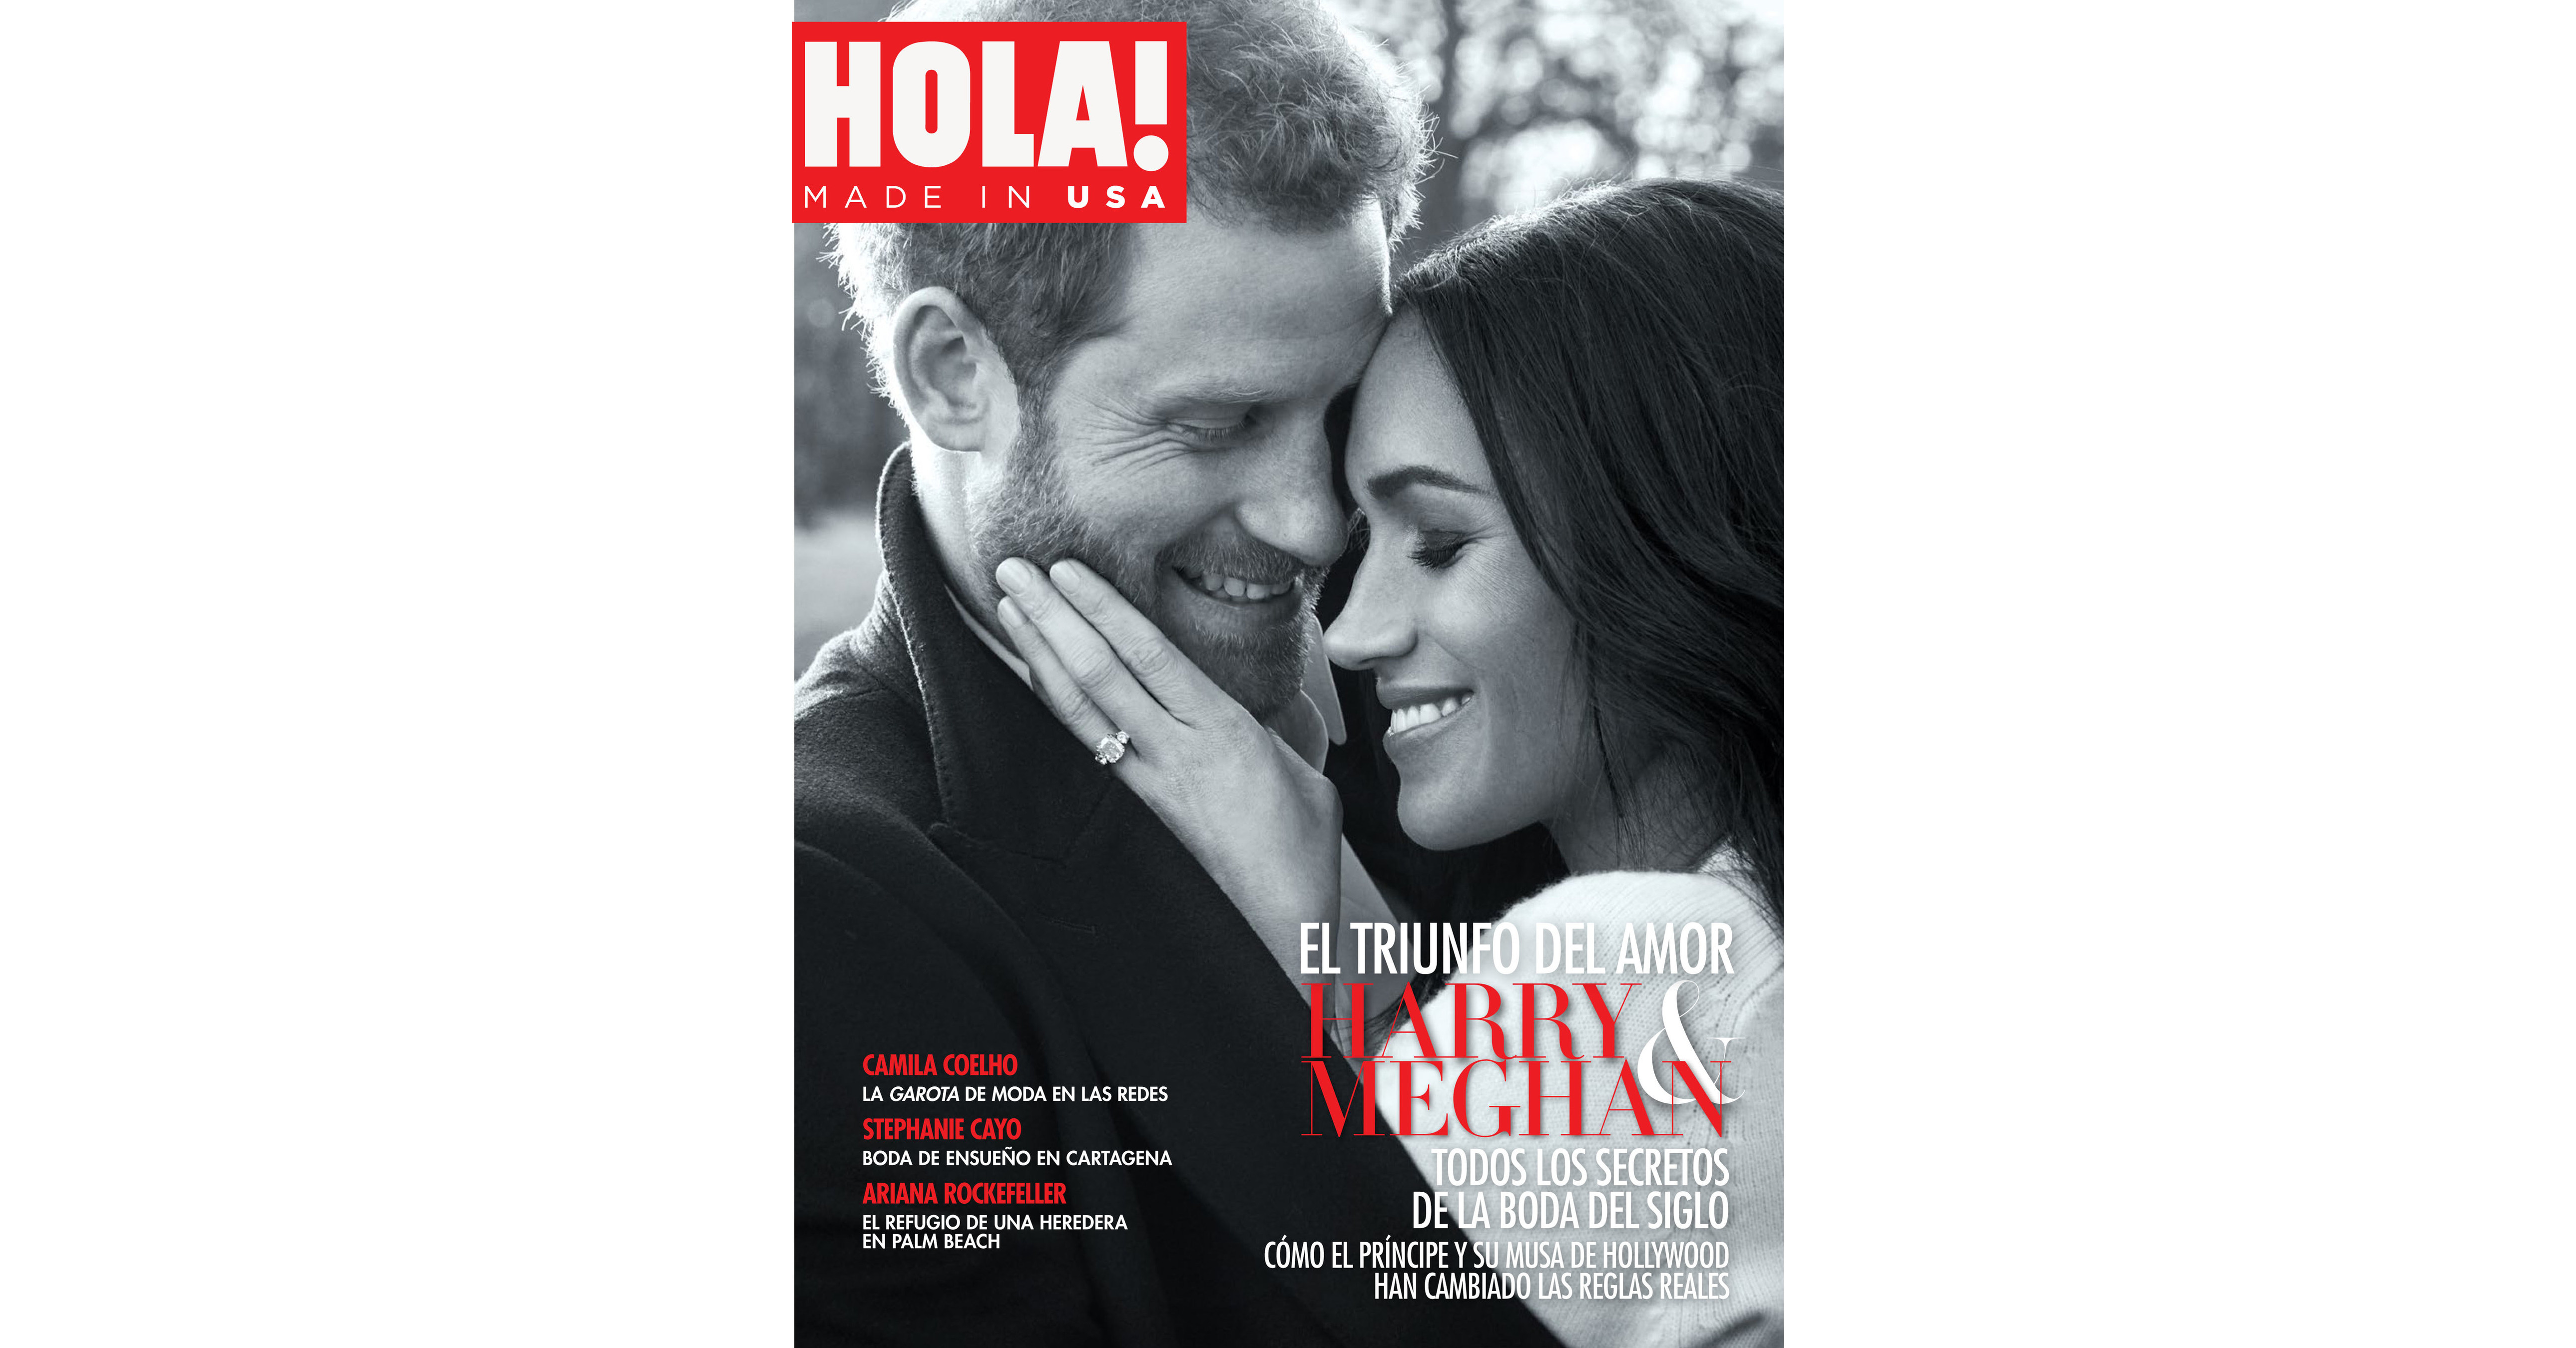 Camila Coelho: latest news and pictures - HOLA! USA